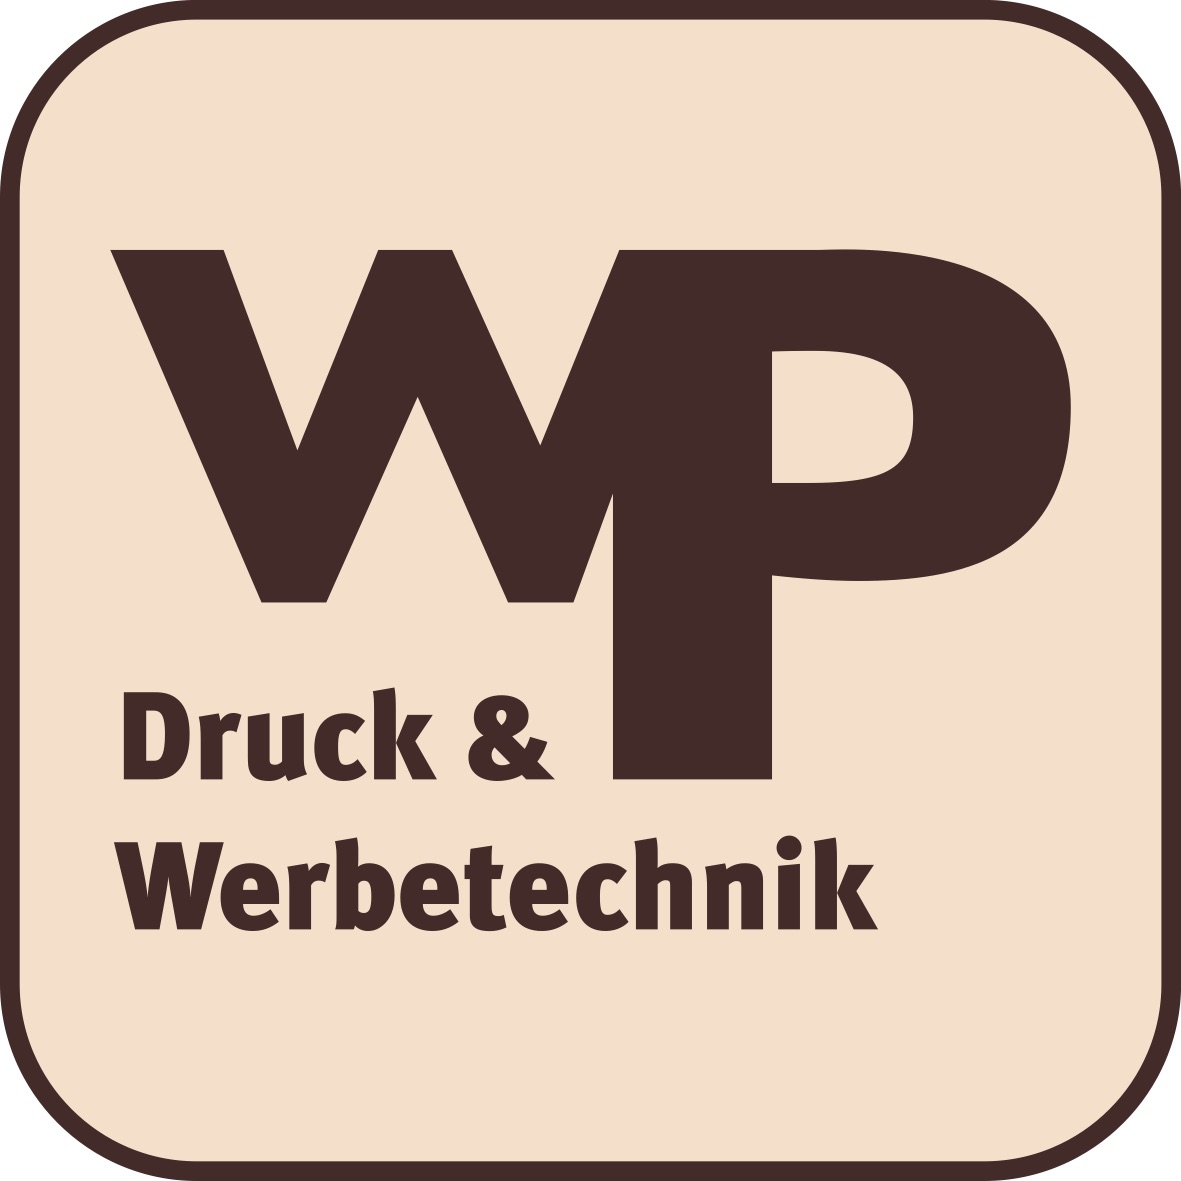 WP Druck & Werbetechnik